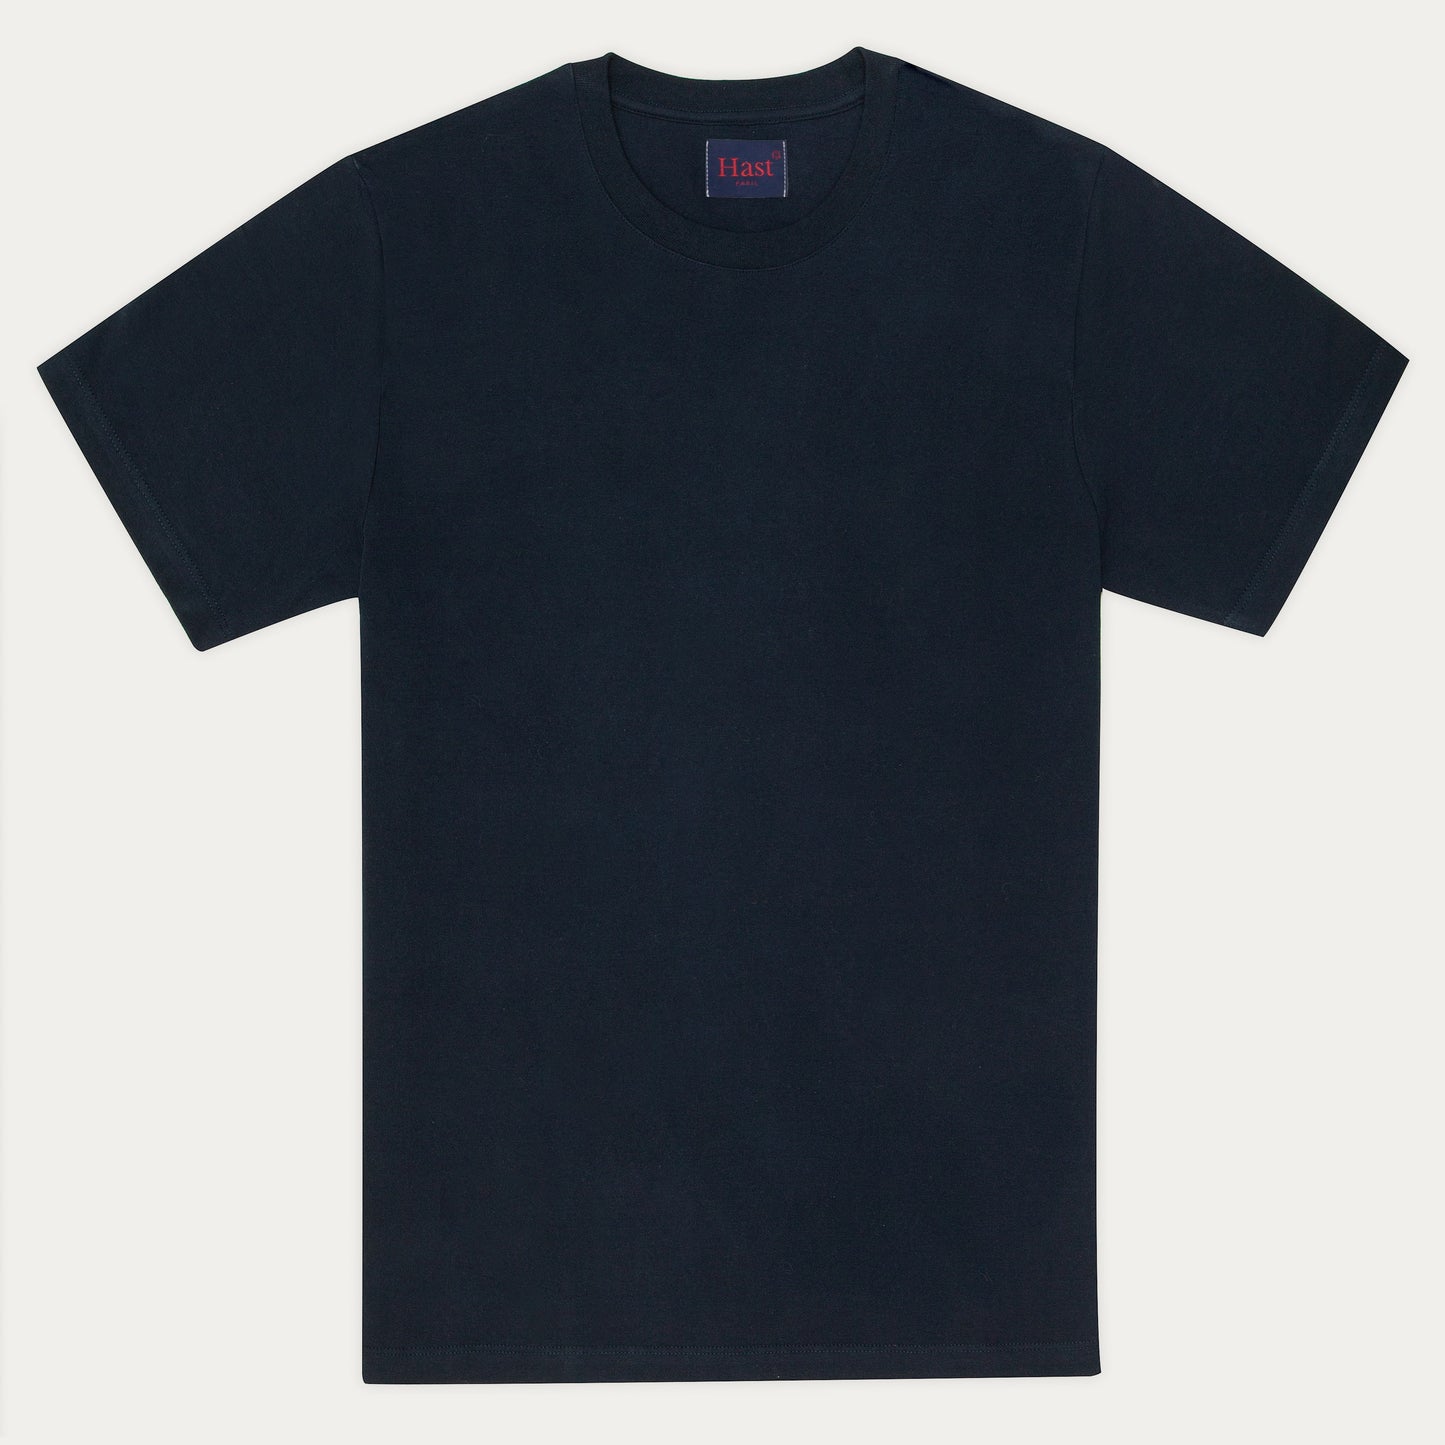 Navy blue organic cotton T-shirt